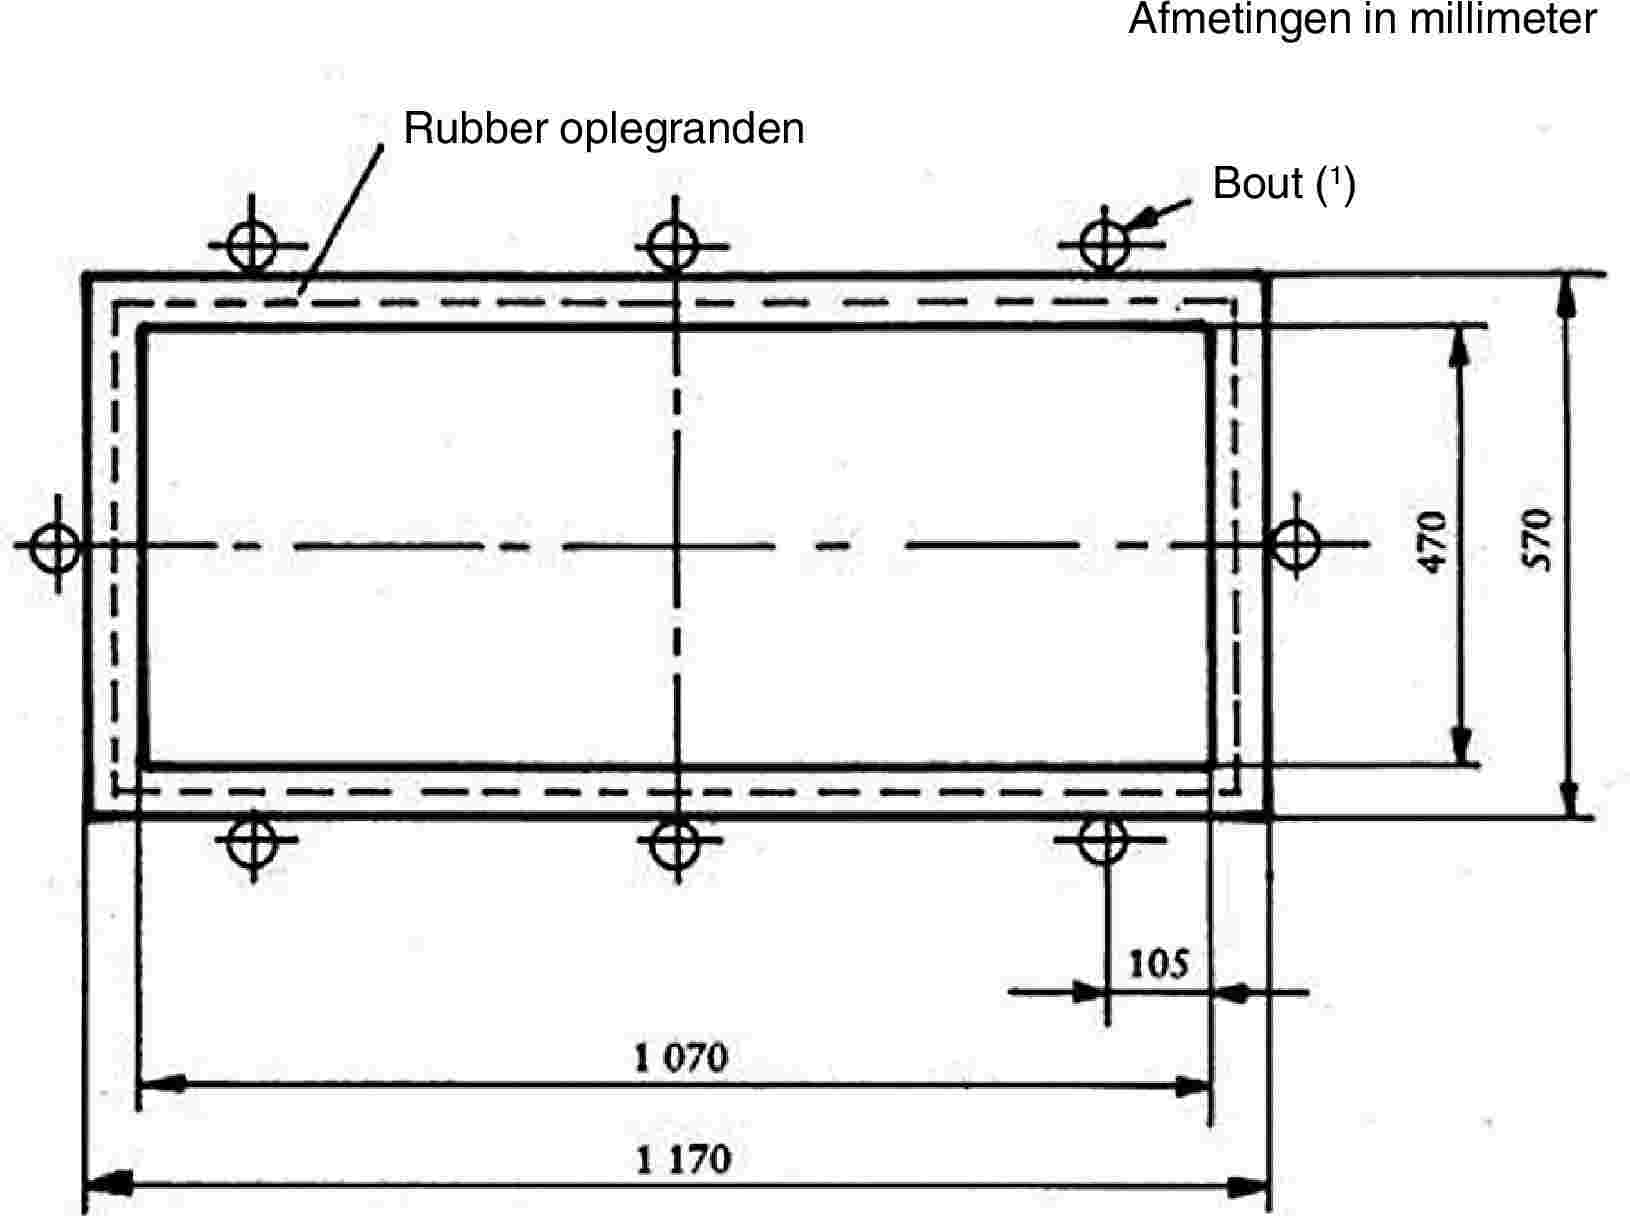 Rubber oplegrandenAfmetingen in millimeterBout (1)